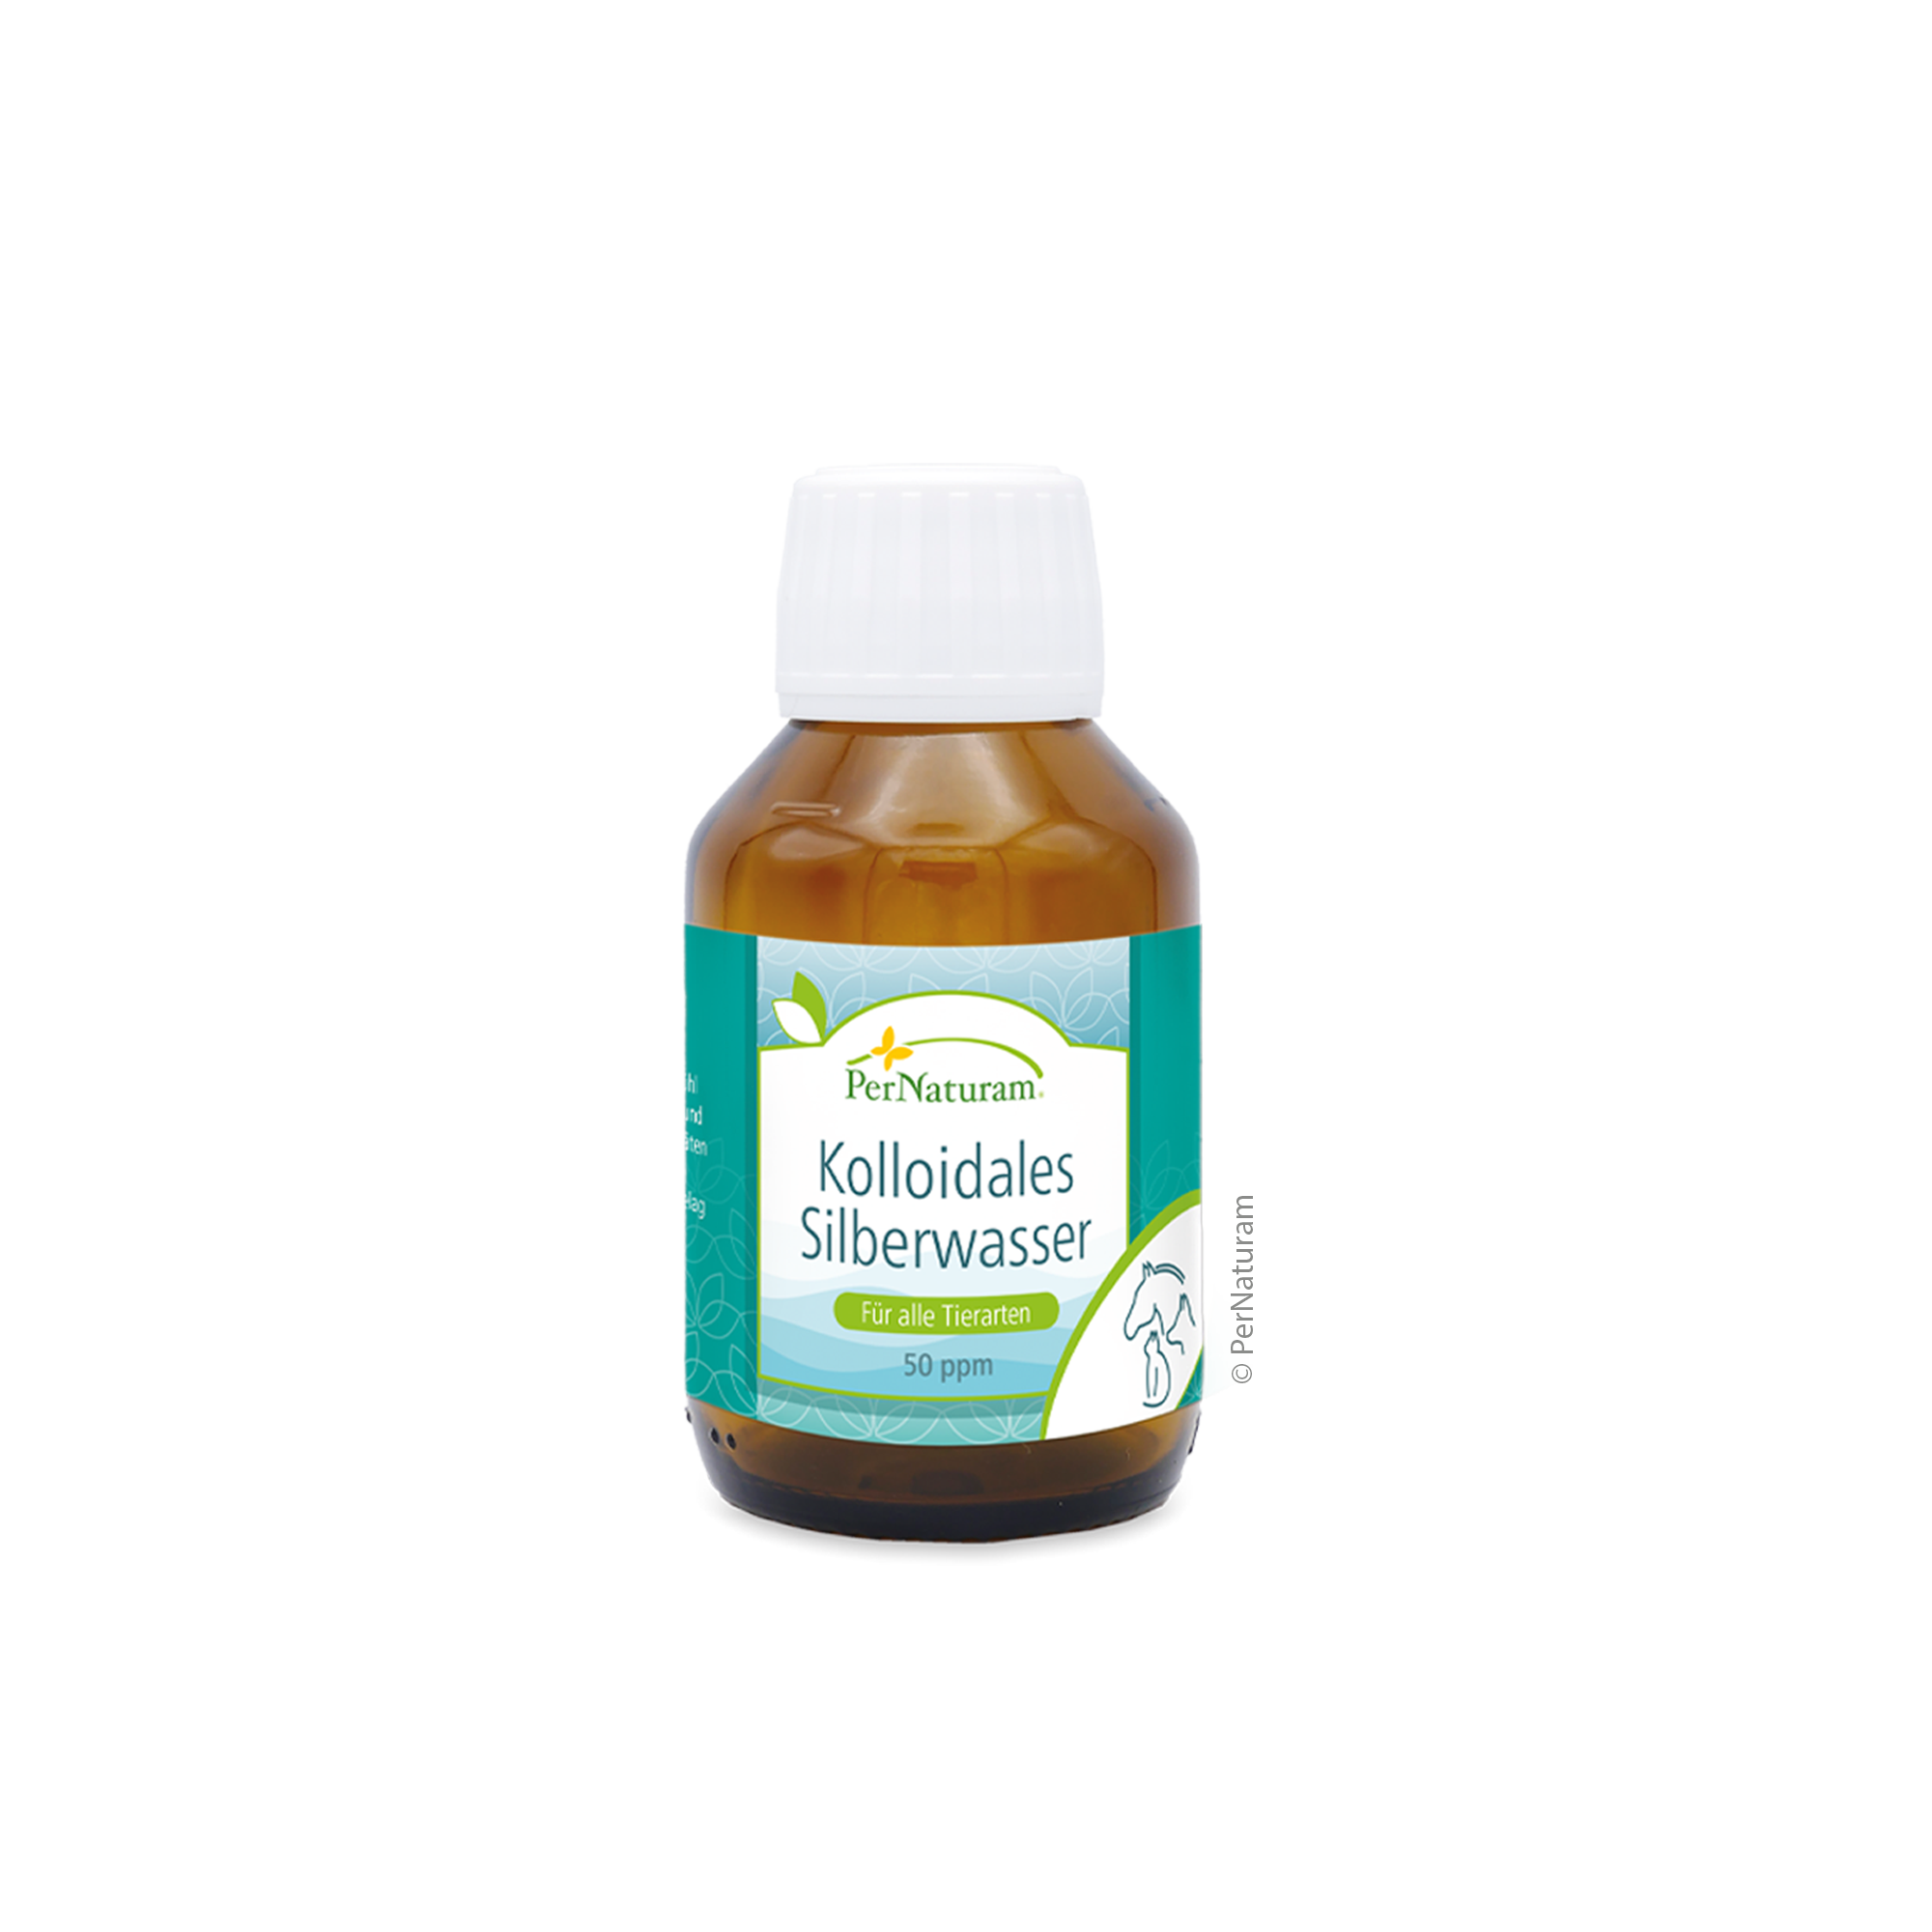 PerNaturam Kolloidales Silberwasser 50 ppm 0,1 l